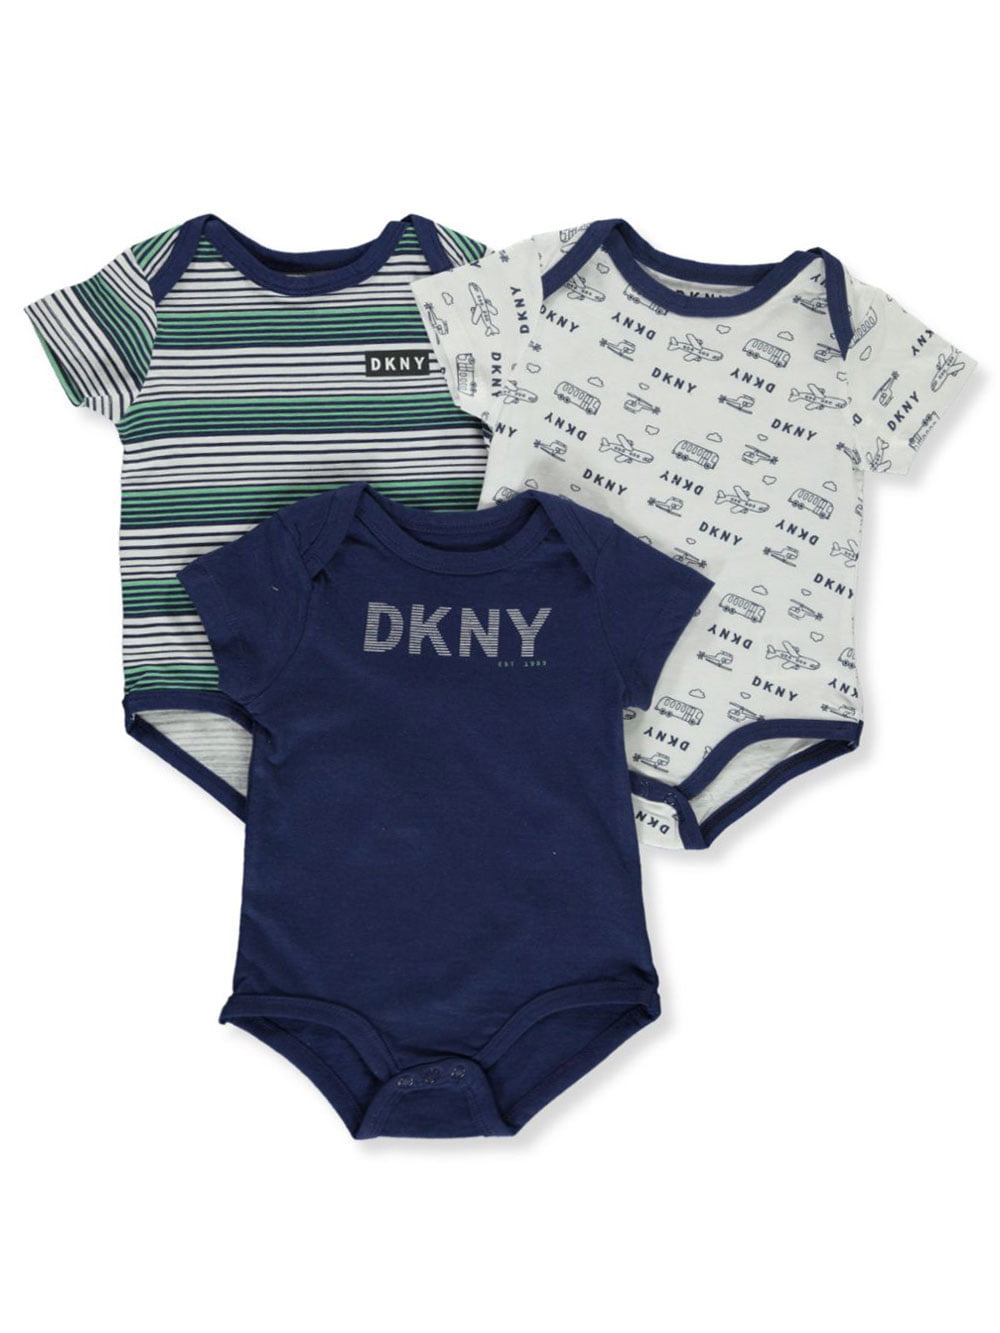 DKNY Infant Boys Three-Pack Bodysuit Set Size 0/3M 3/6M 6/9M $28 